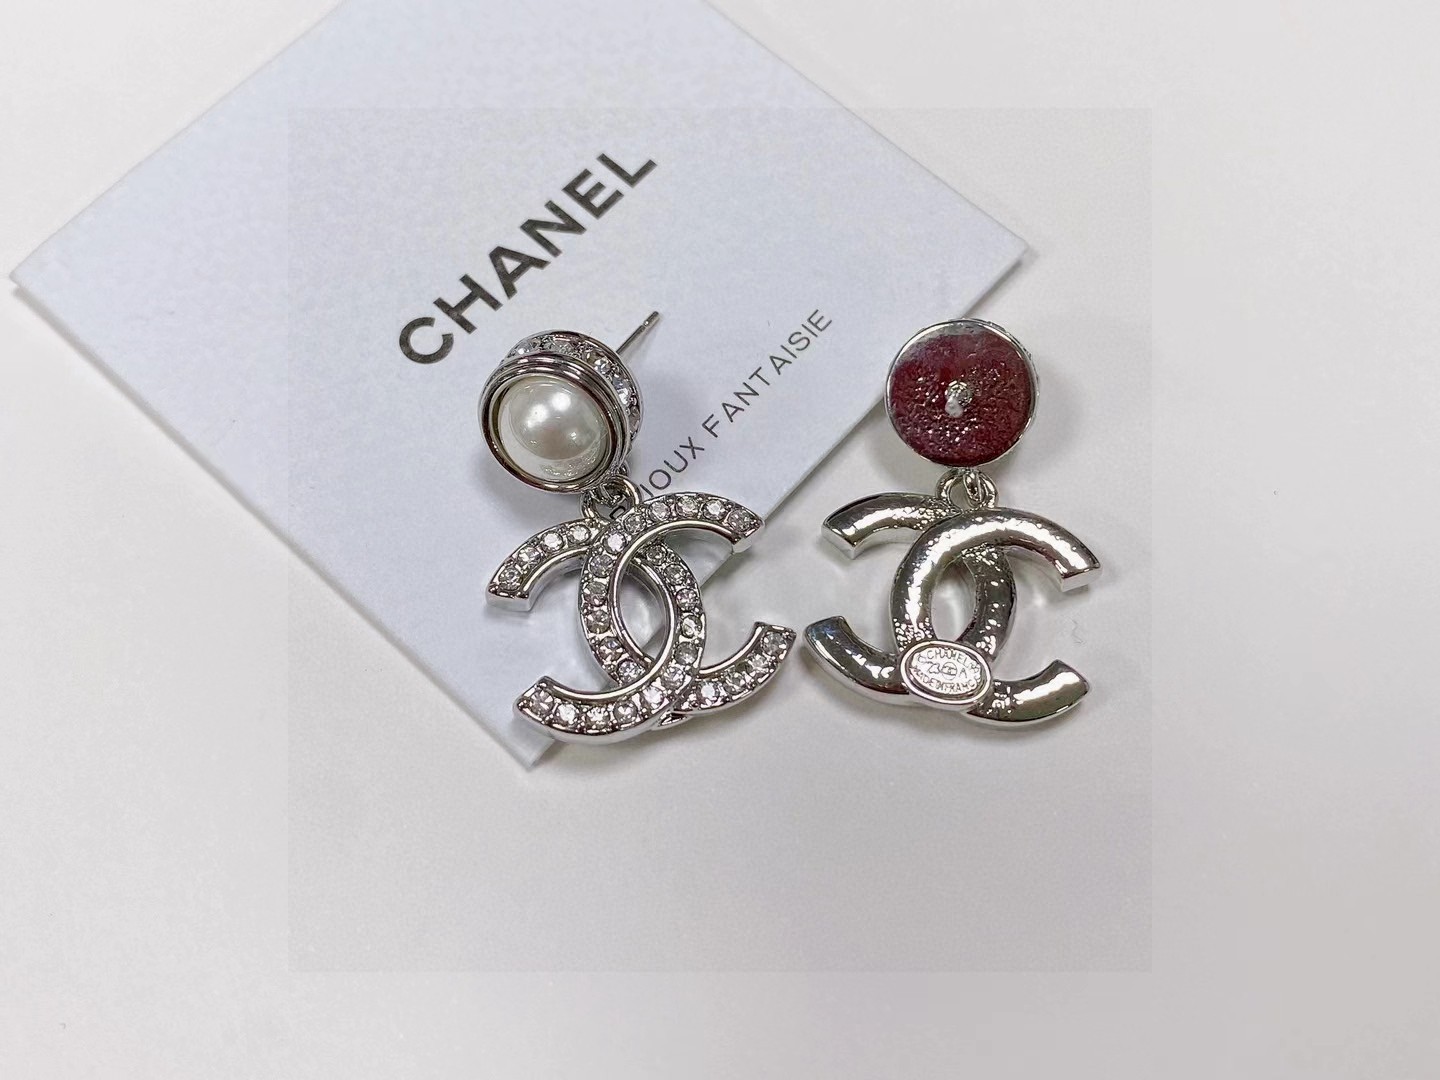 Chanel香奈儿中古双C耳钉小香家的款式真心无需多介绍每一款都超好看精致大方非常显气质